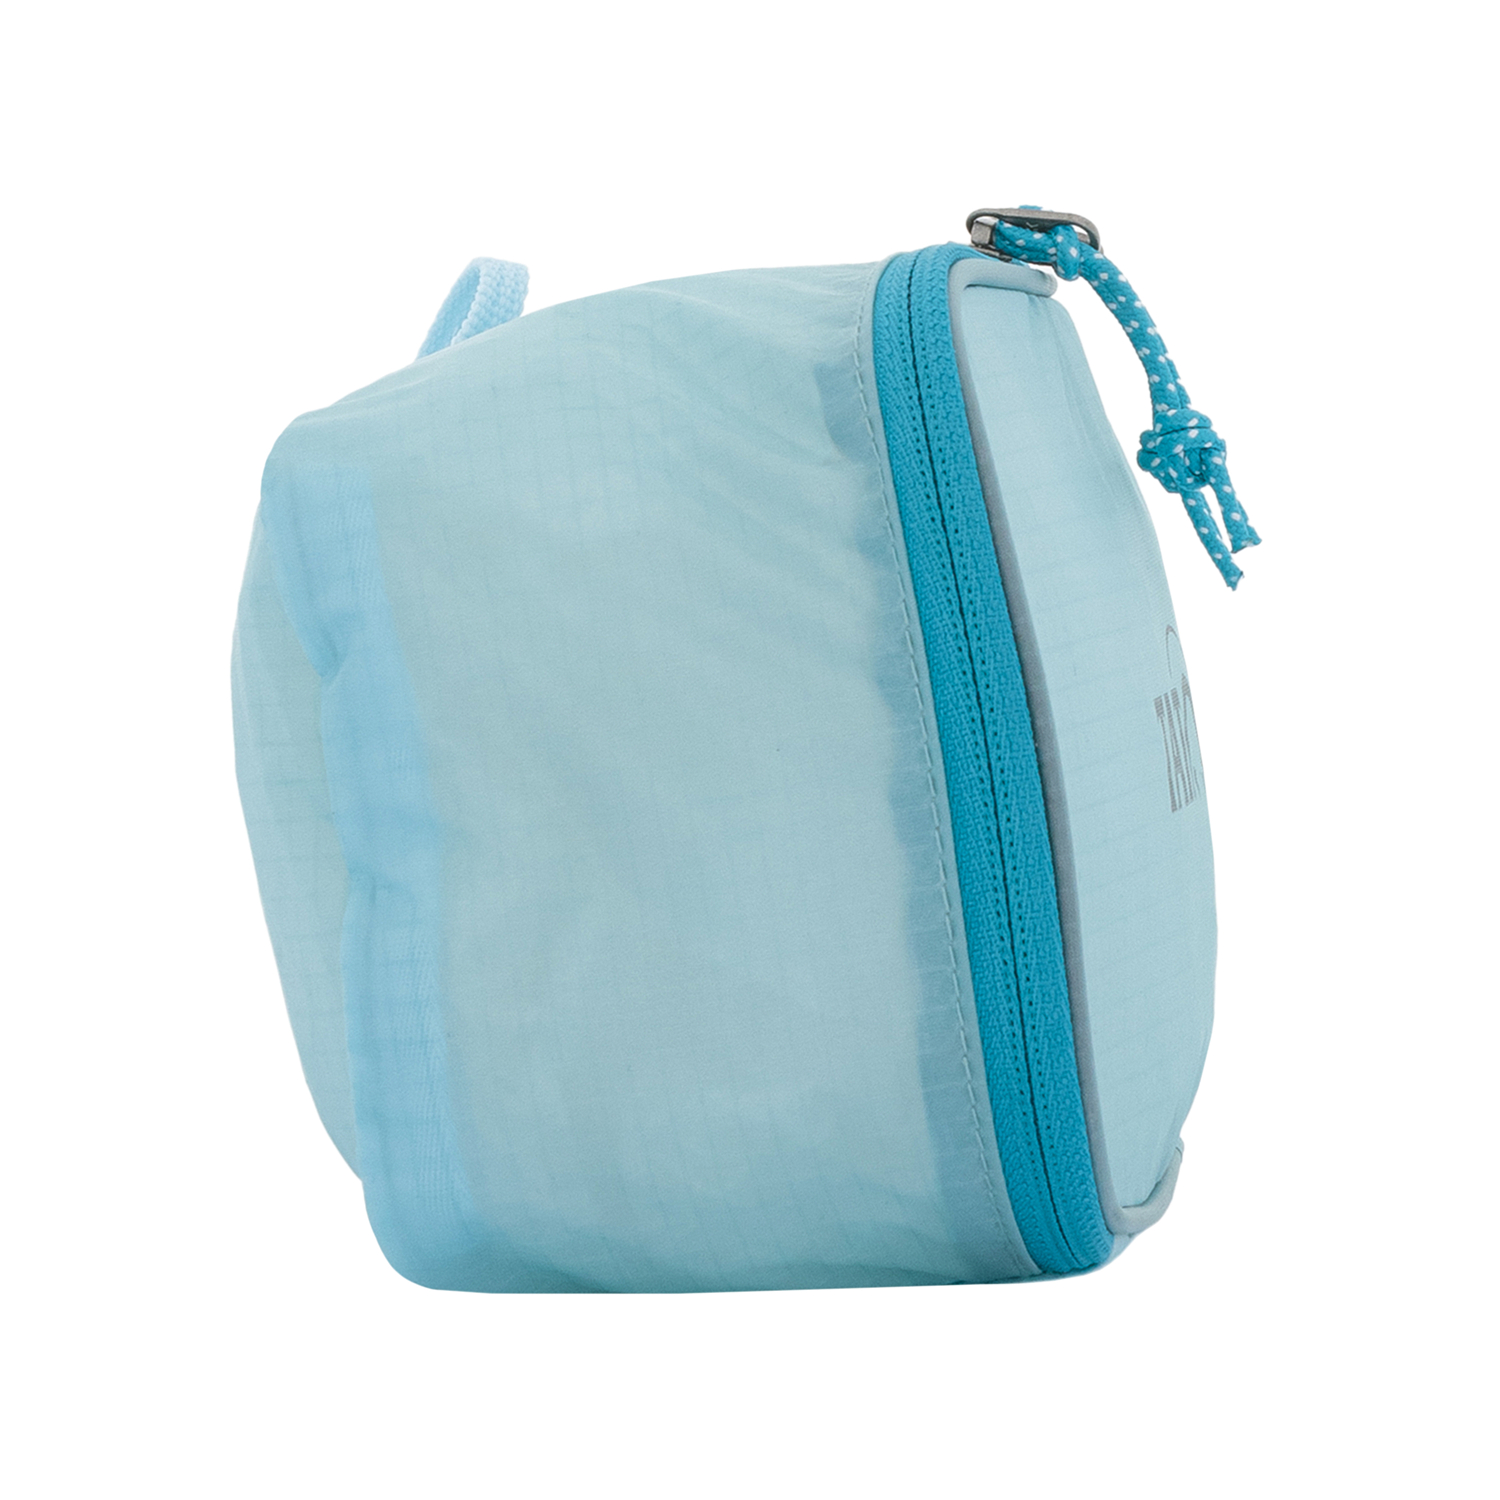 Мешок упаковочный Tatonka SQZY Pouch S 1,5л Light Blue